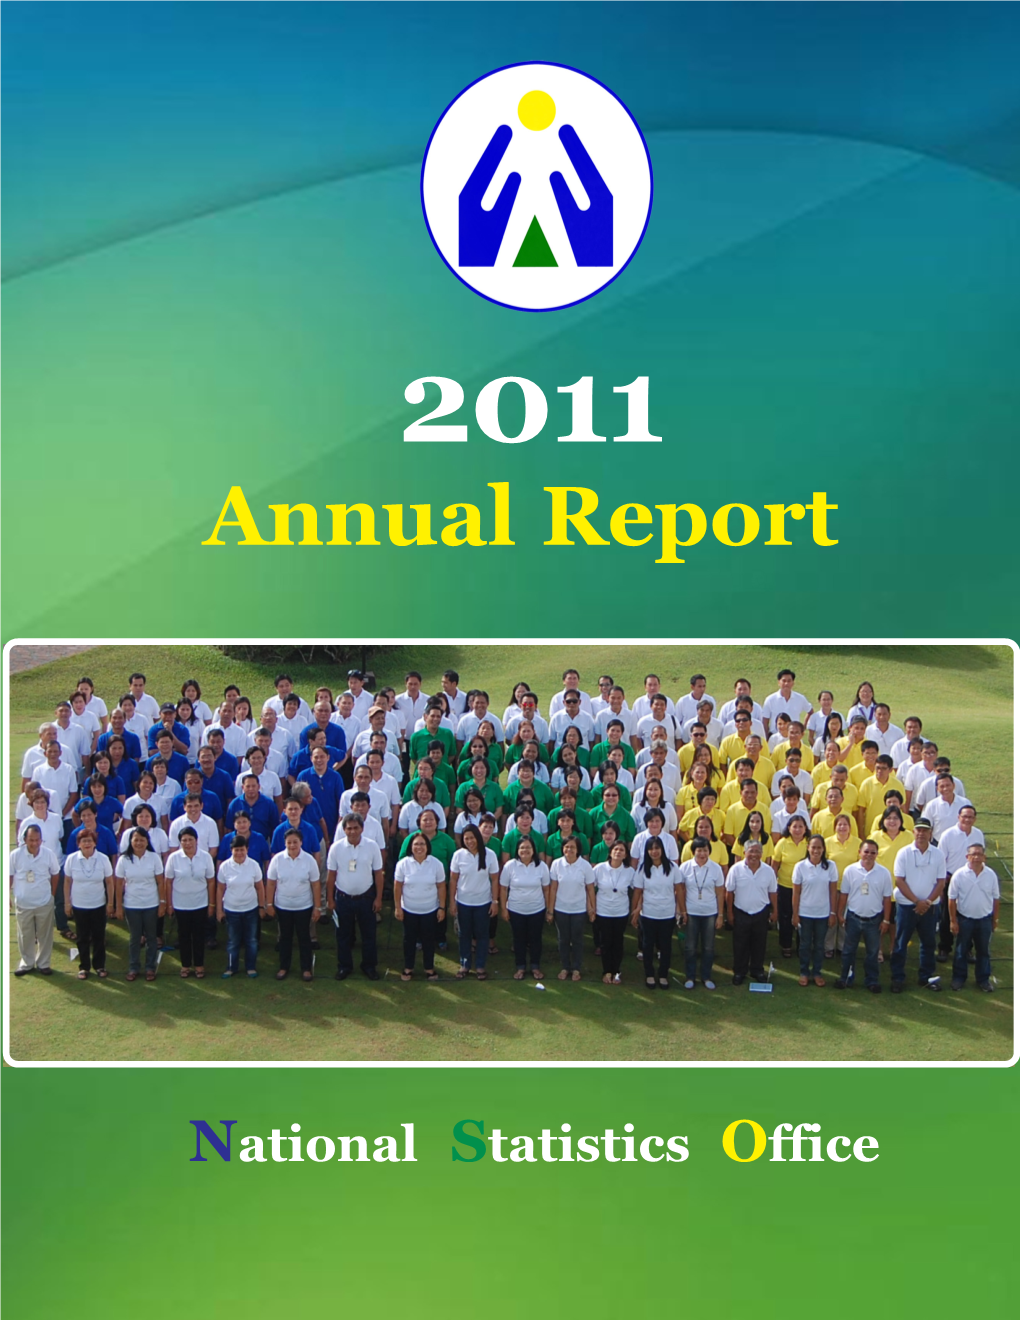 2010 Annual Report Final 09.09.2011